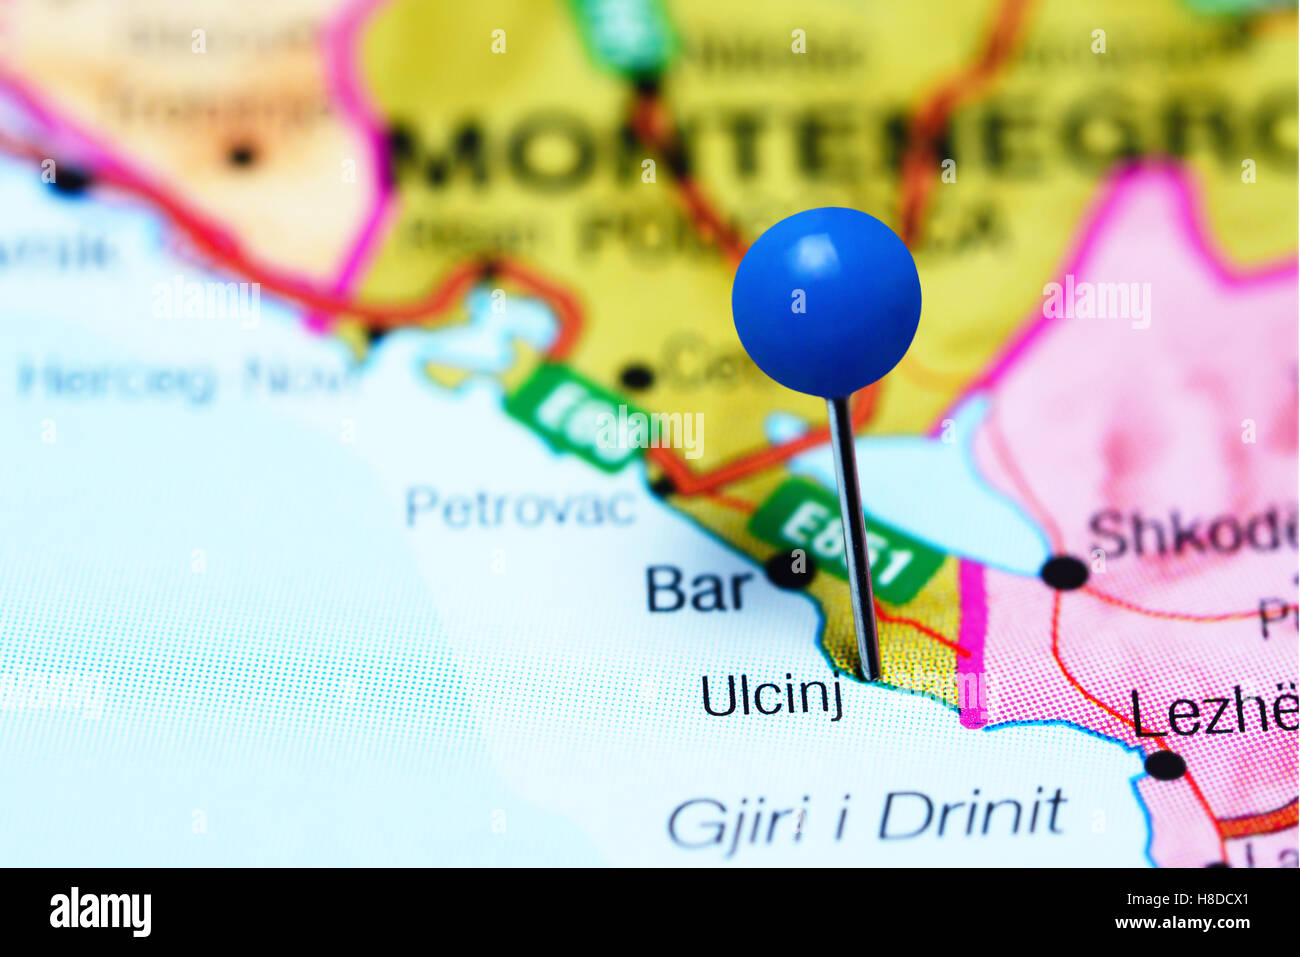 Ulcinj pinned on a map of Montenegro Stock Photo